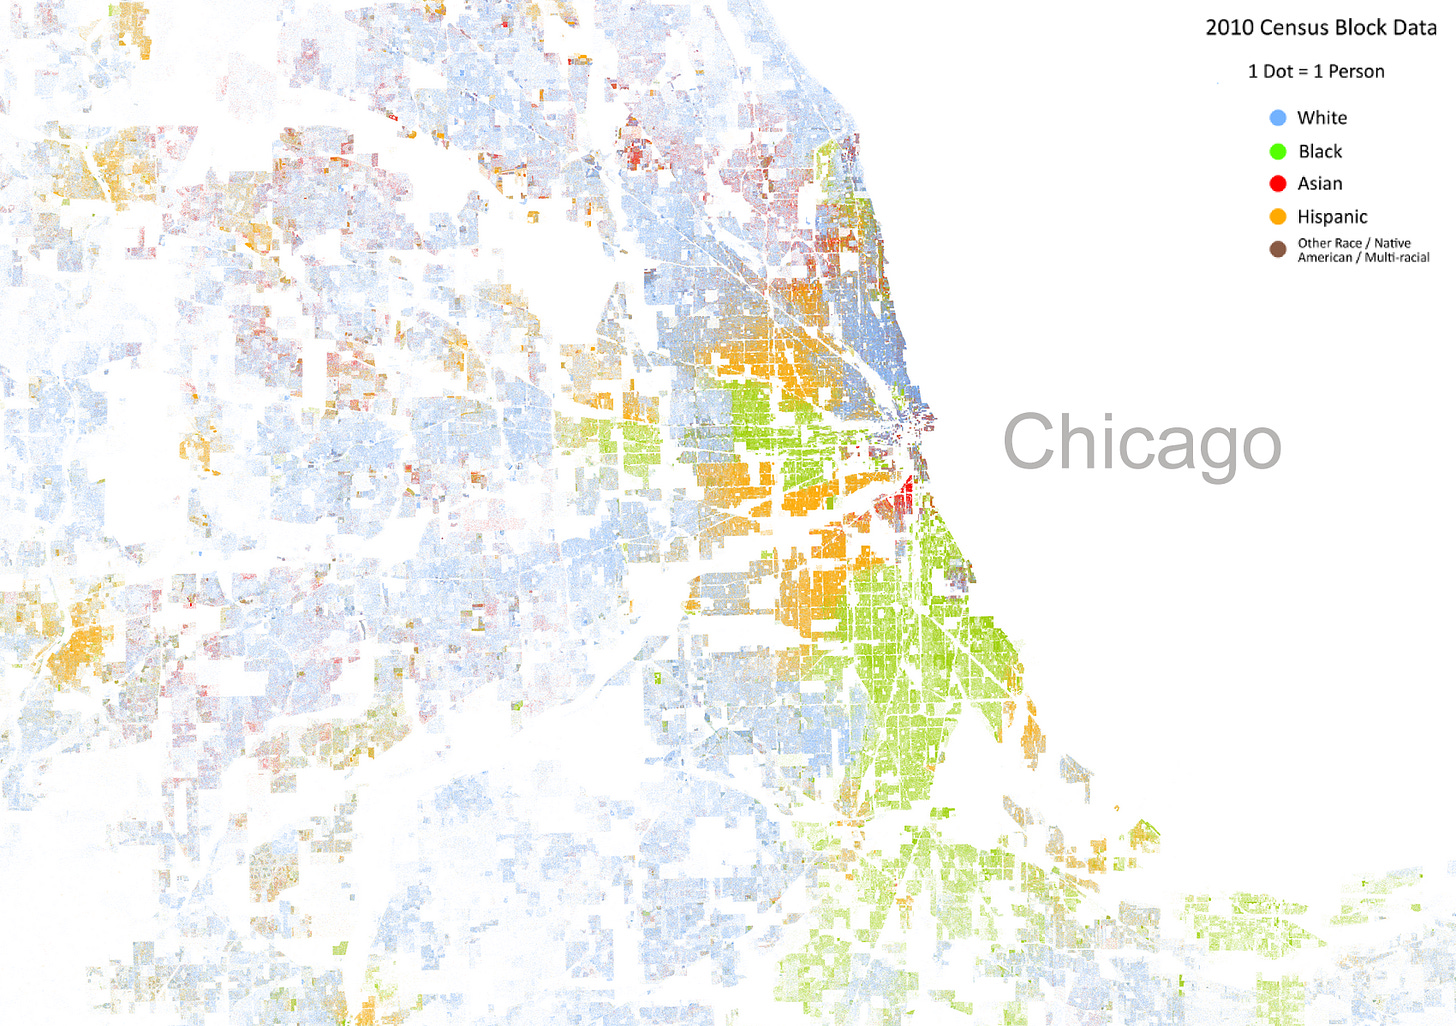 silver-segregation-chicago-dot